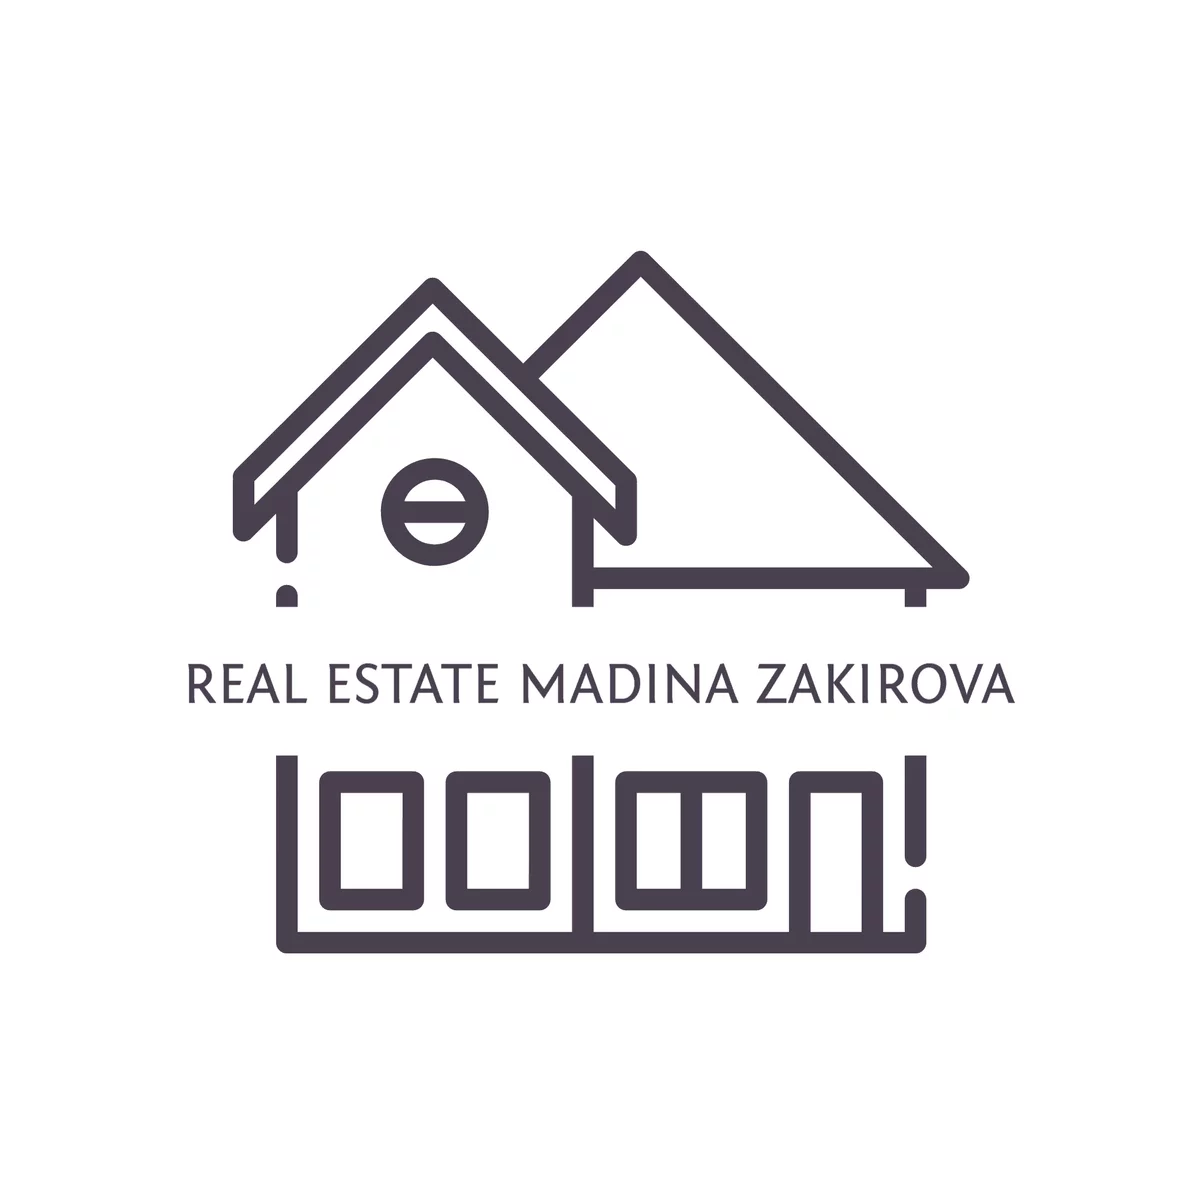 Real Estate Madina Zakirova